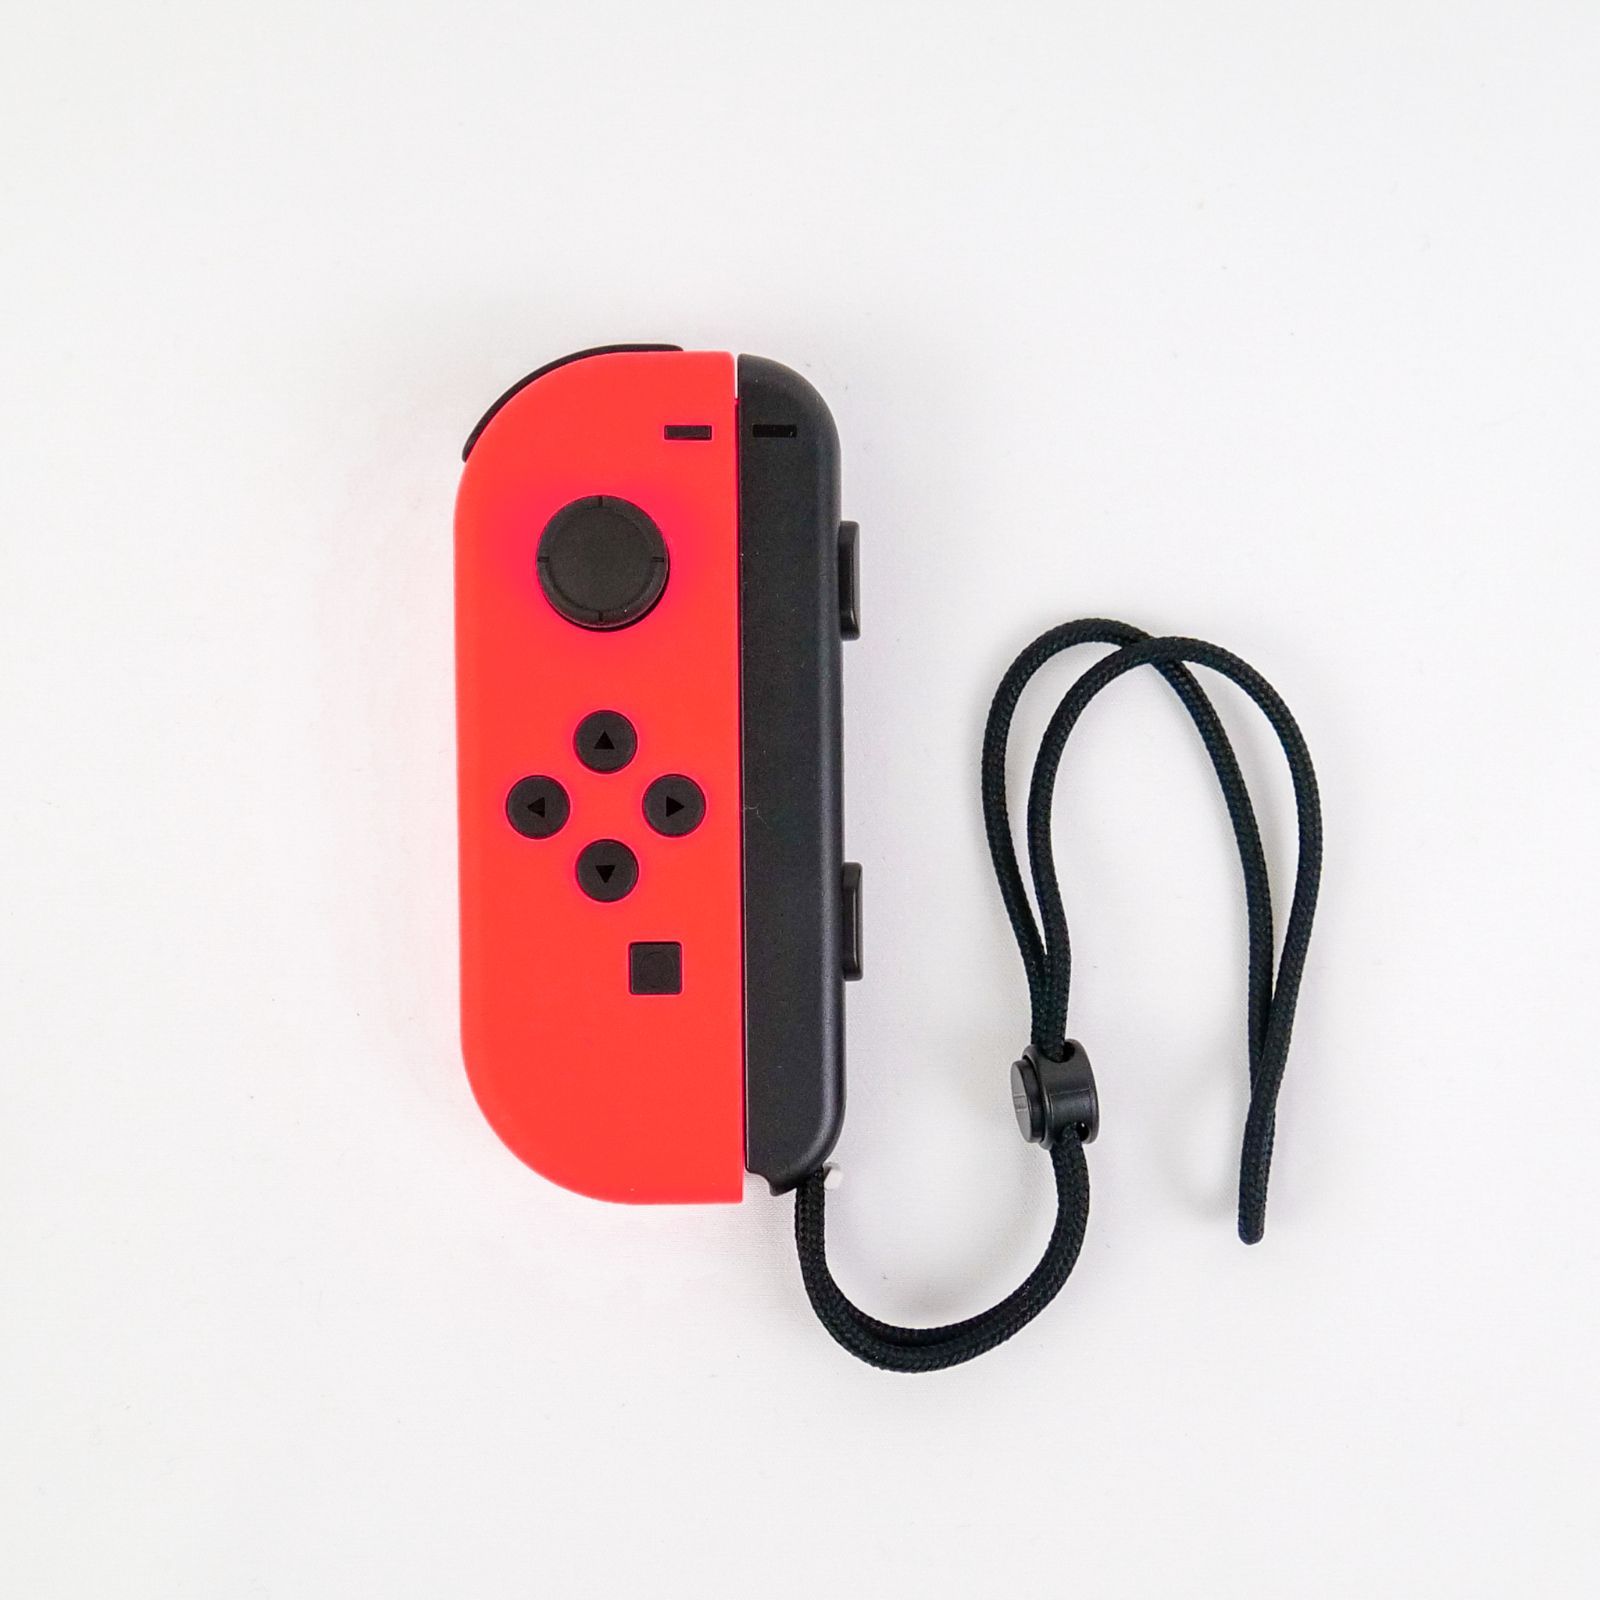 Nintendo Switch Joy-Con(L)/(R)  新品エンタメ/ホビー